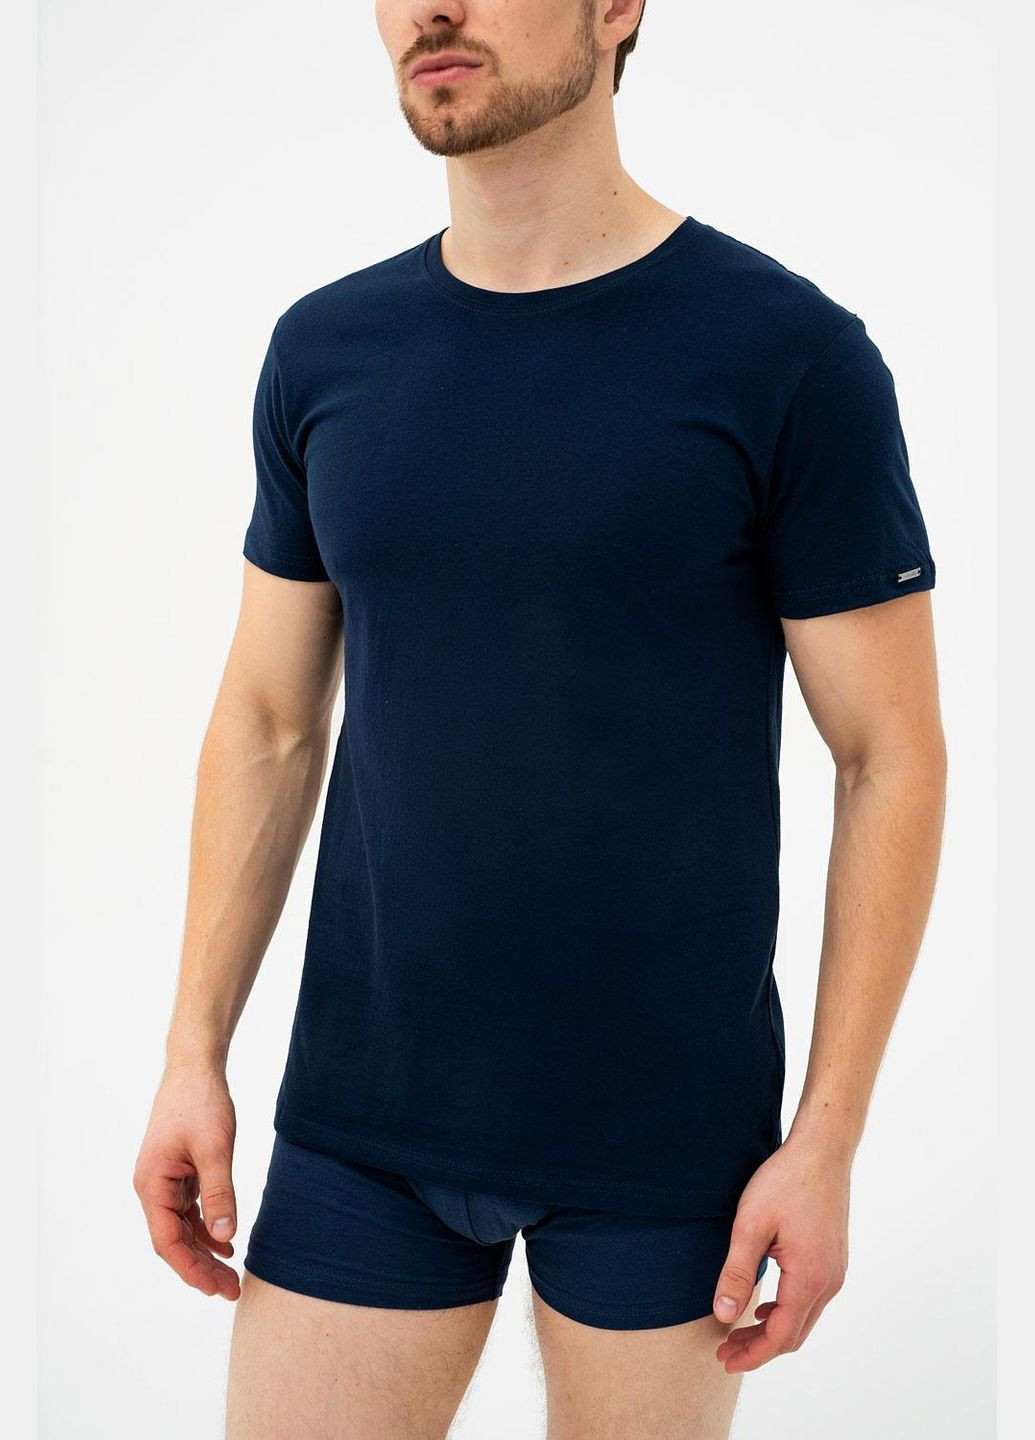 Темно-синяя футболка мужская 3xl navy blue 202 new с коротким рукавом Cornette